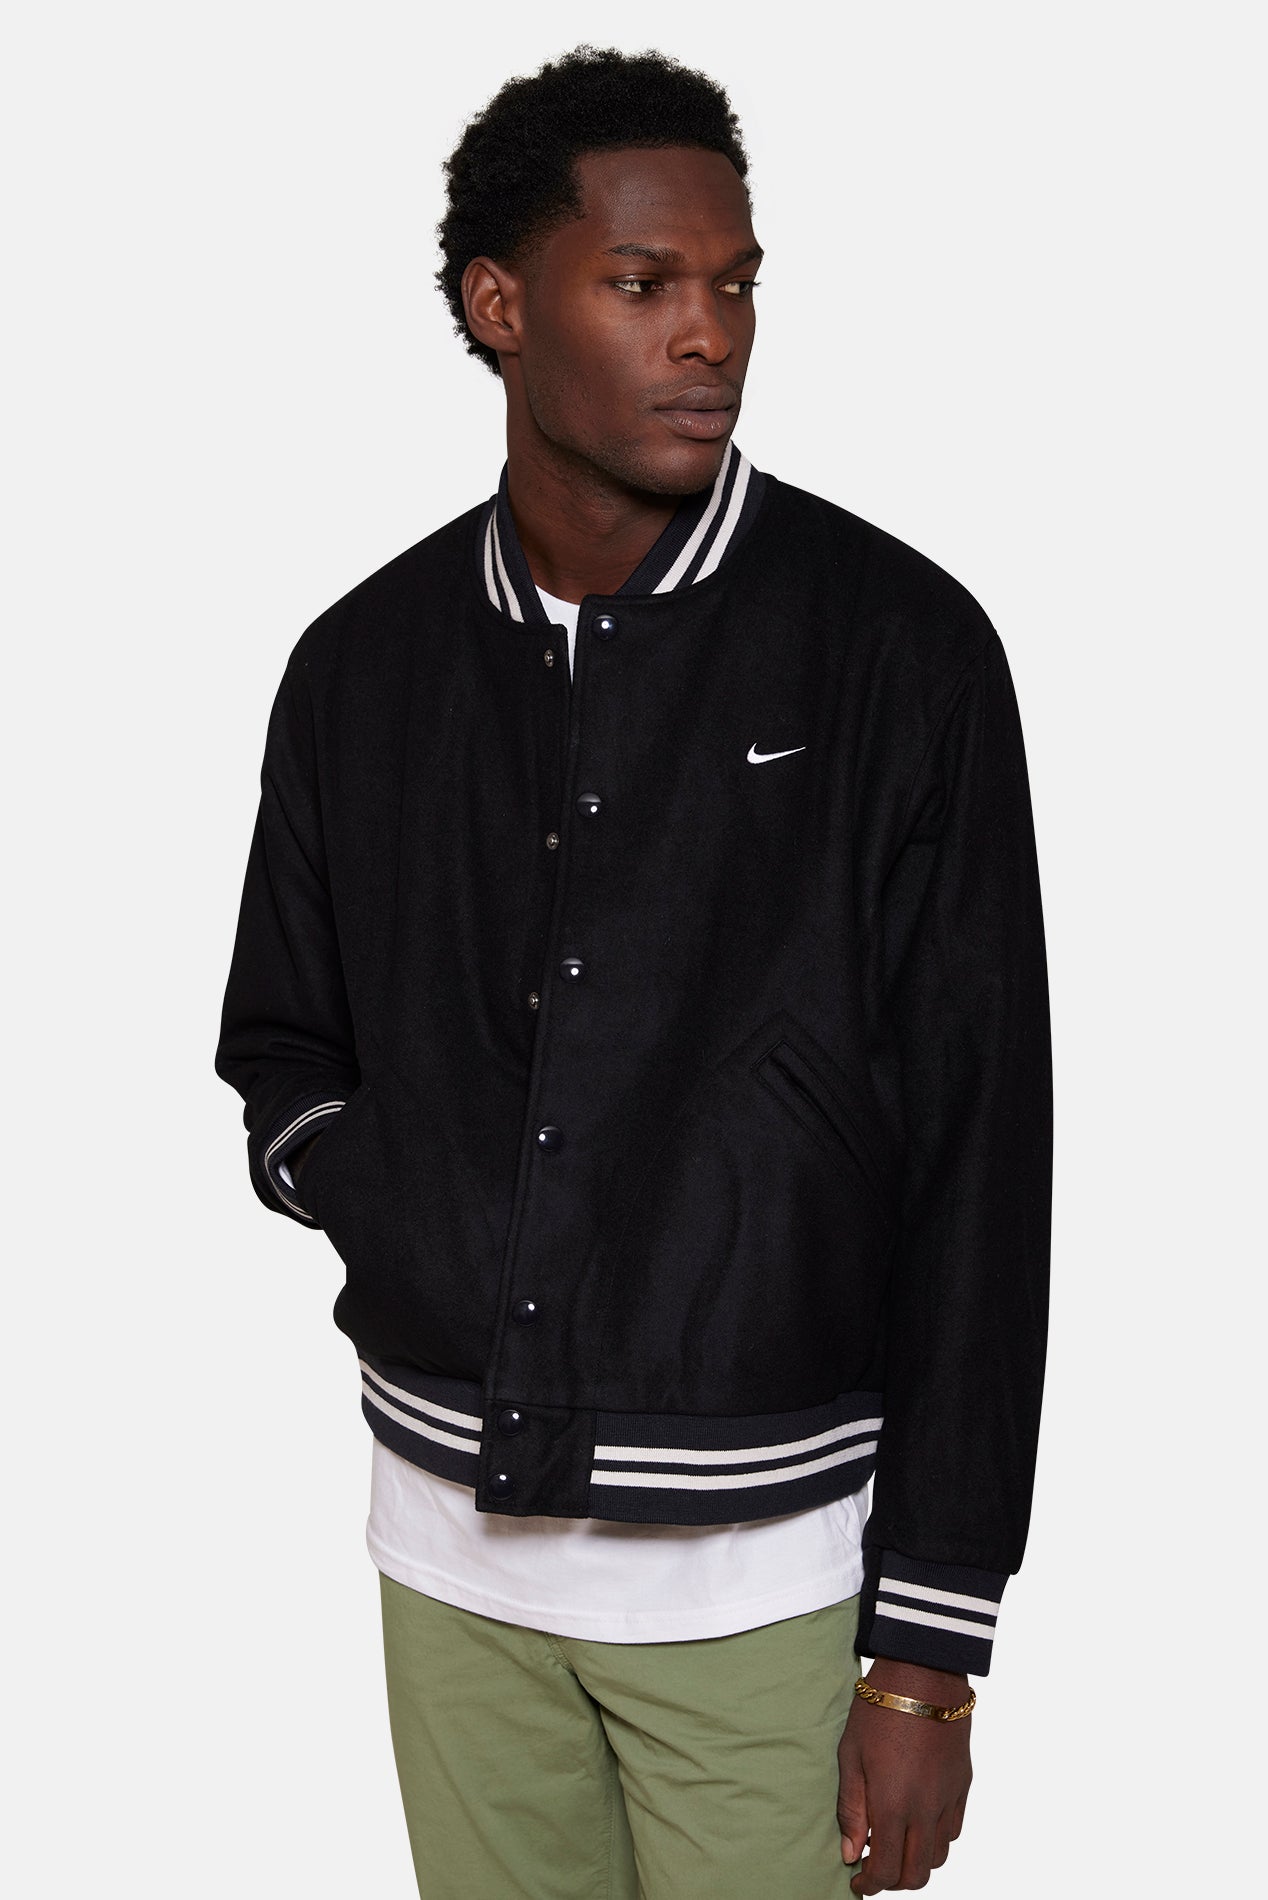 Nike Varsity Jacket For Sale - Danezon